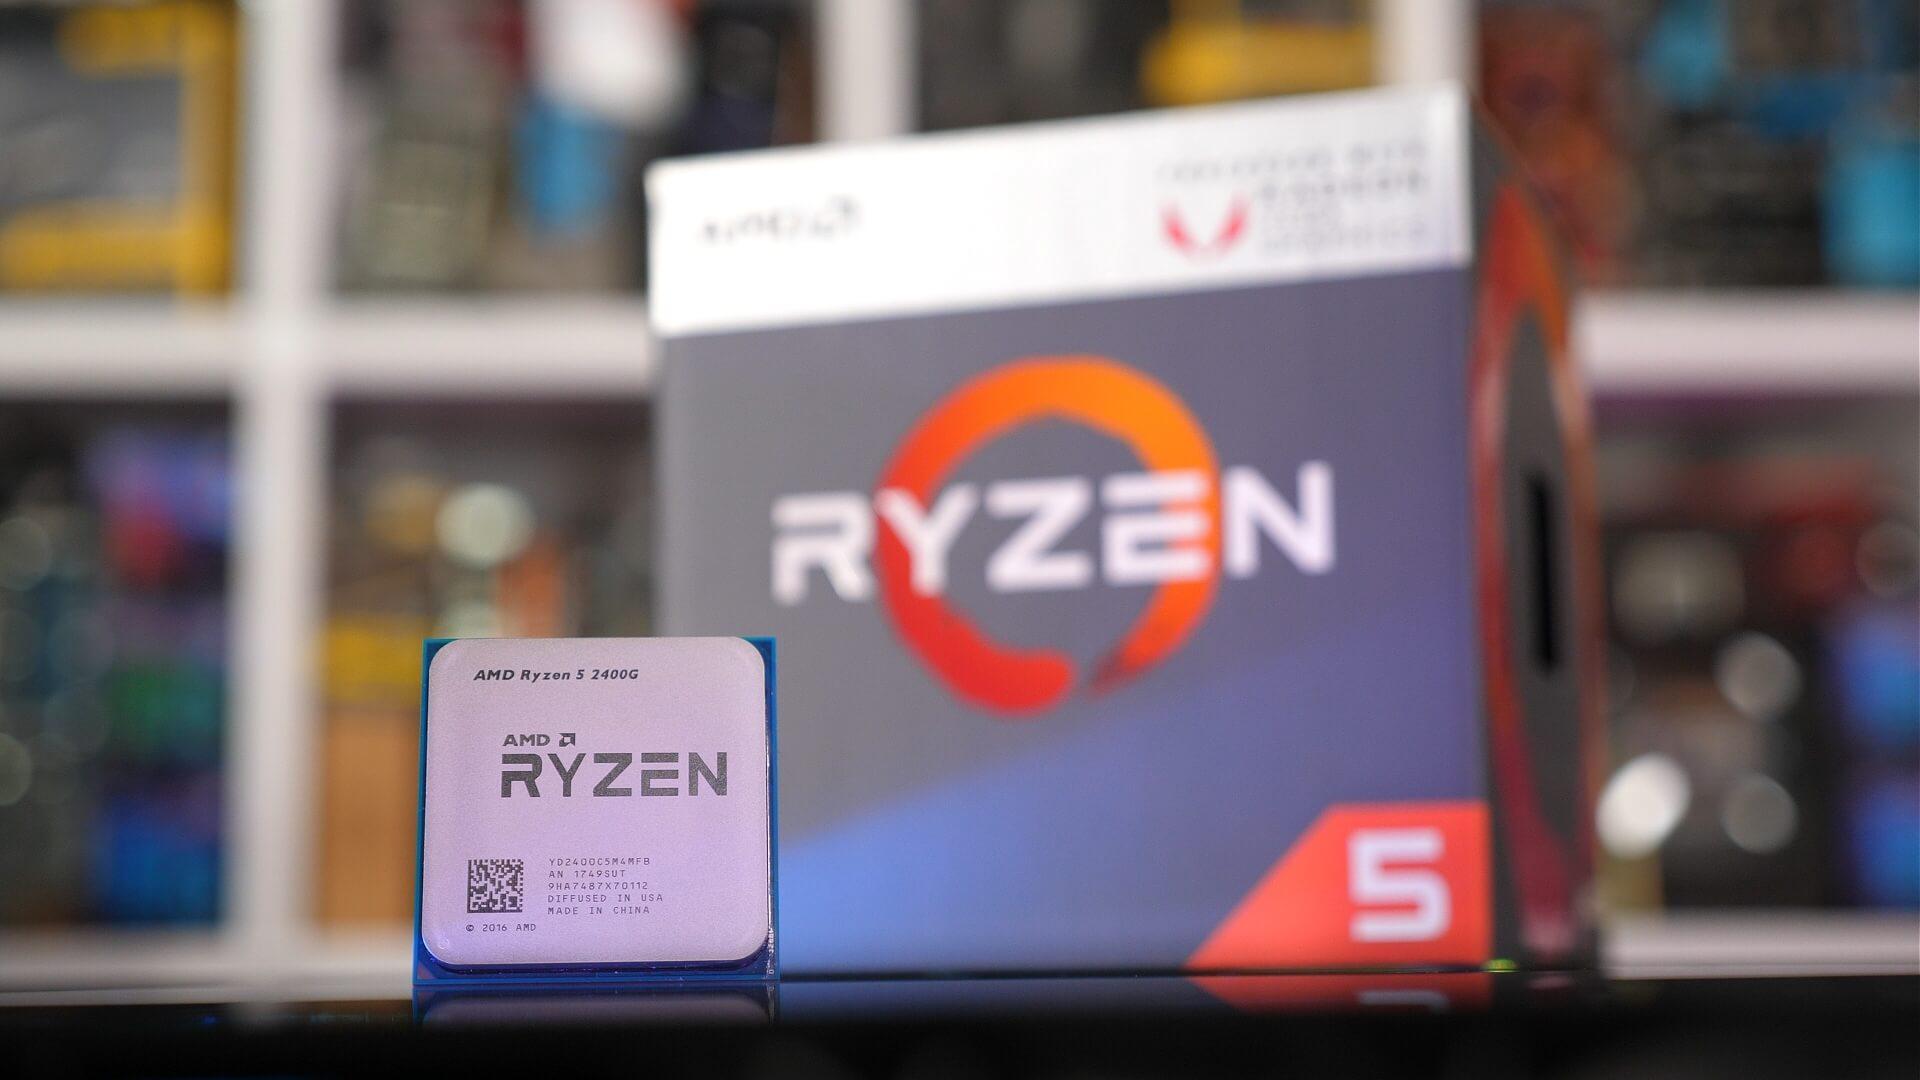 Ryzen 7 pro купить. Ryzen 5 2400g. AMD Ryzen 5 Pro 2400g. AMD Ryzen 5 Pro 2400g Box. AMD Risen 5 2400g.